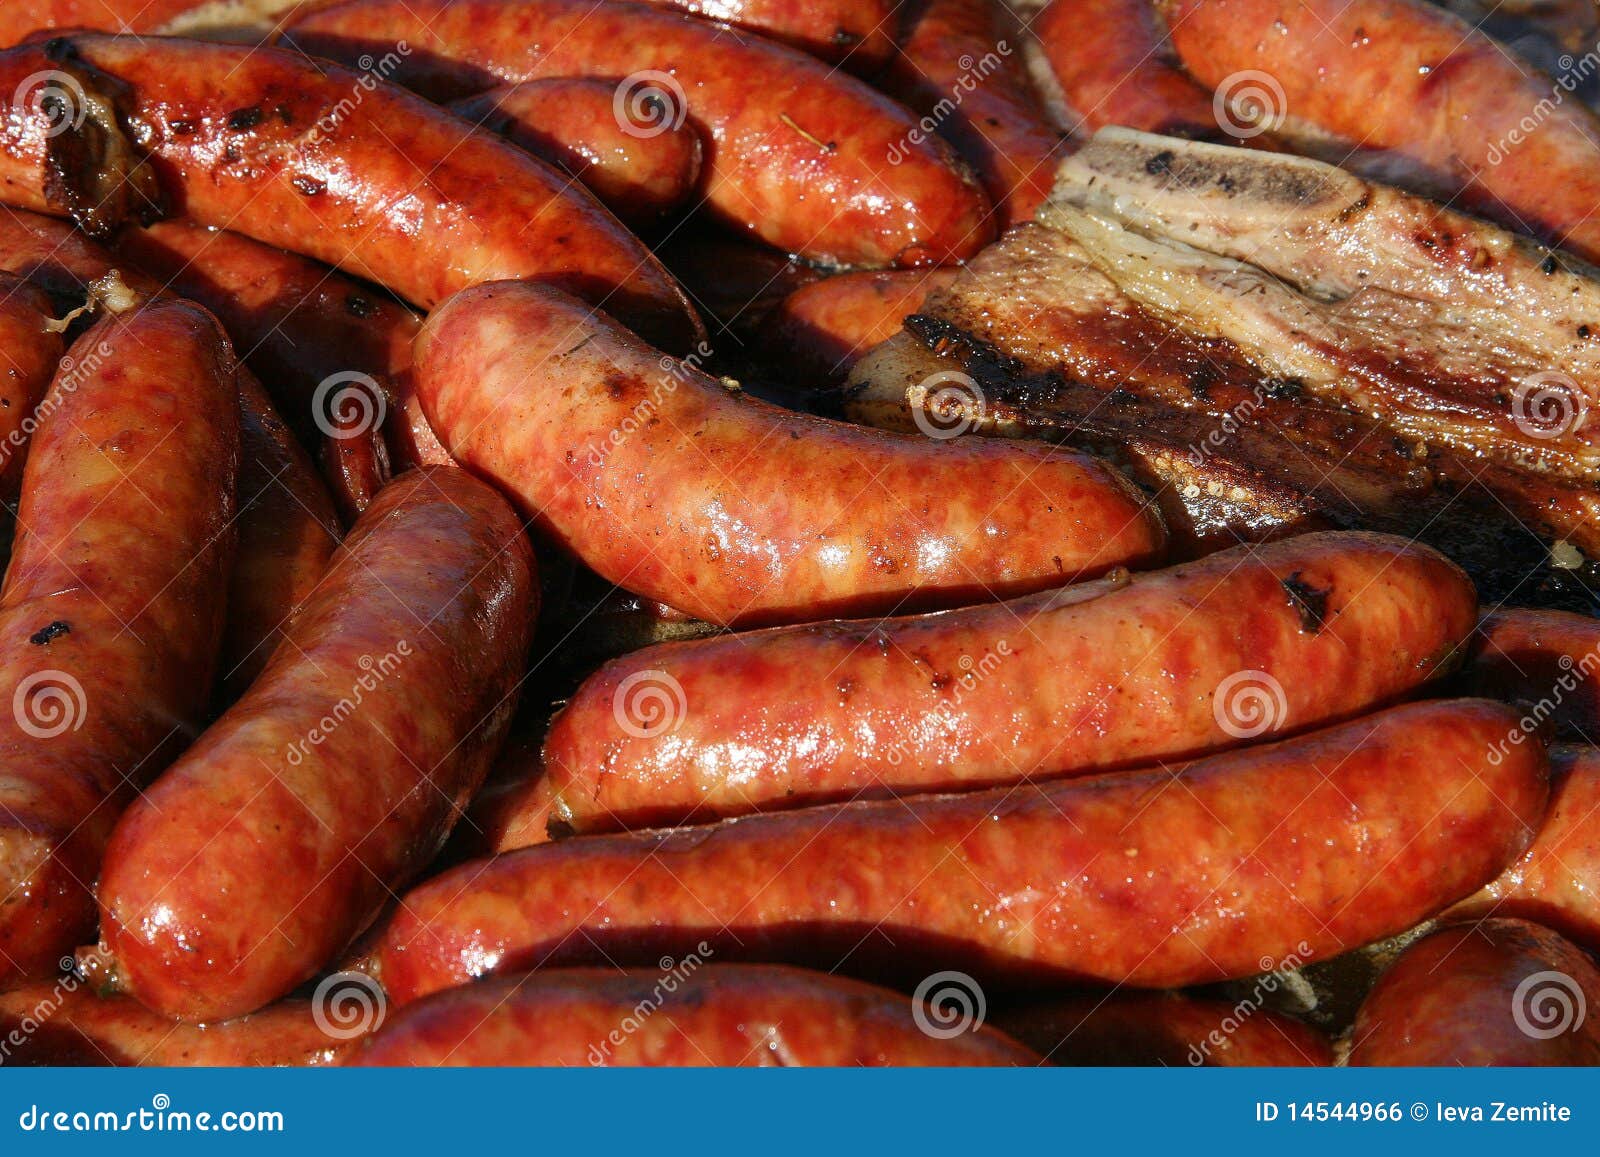 tempting sausages